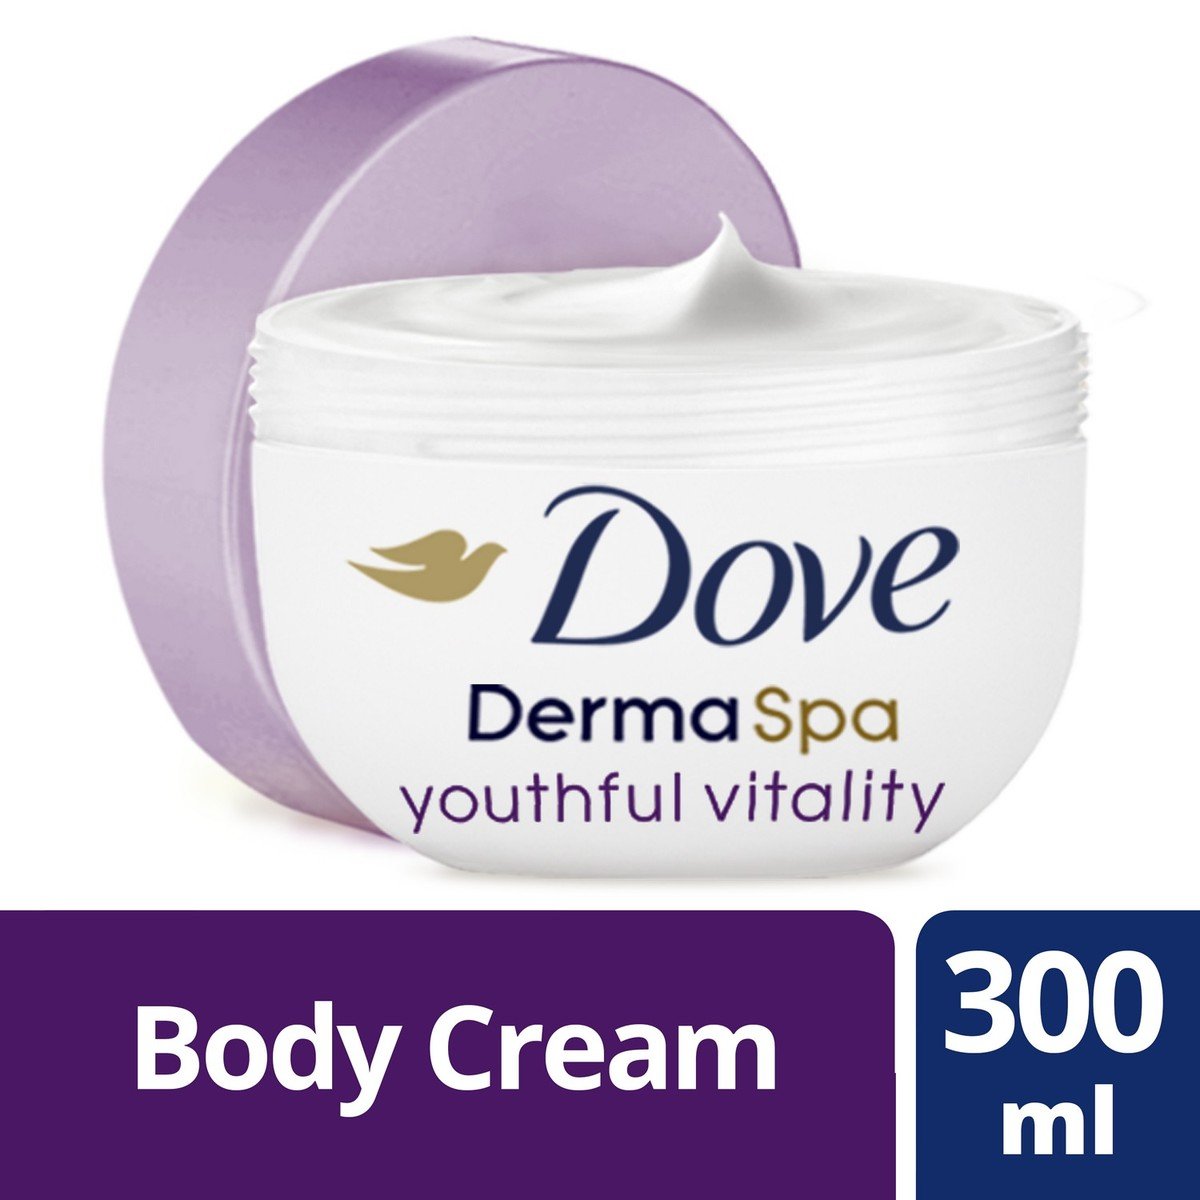 Dove DermaSpa Body Cream Youthful Vitality 300 ml